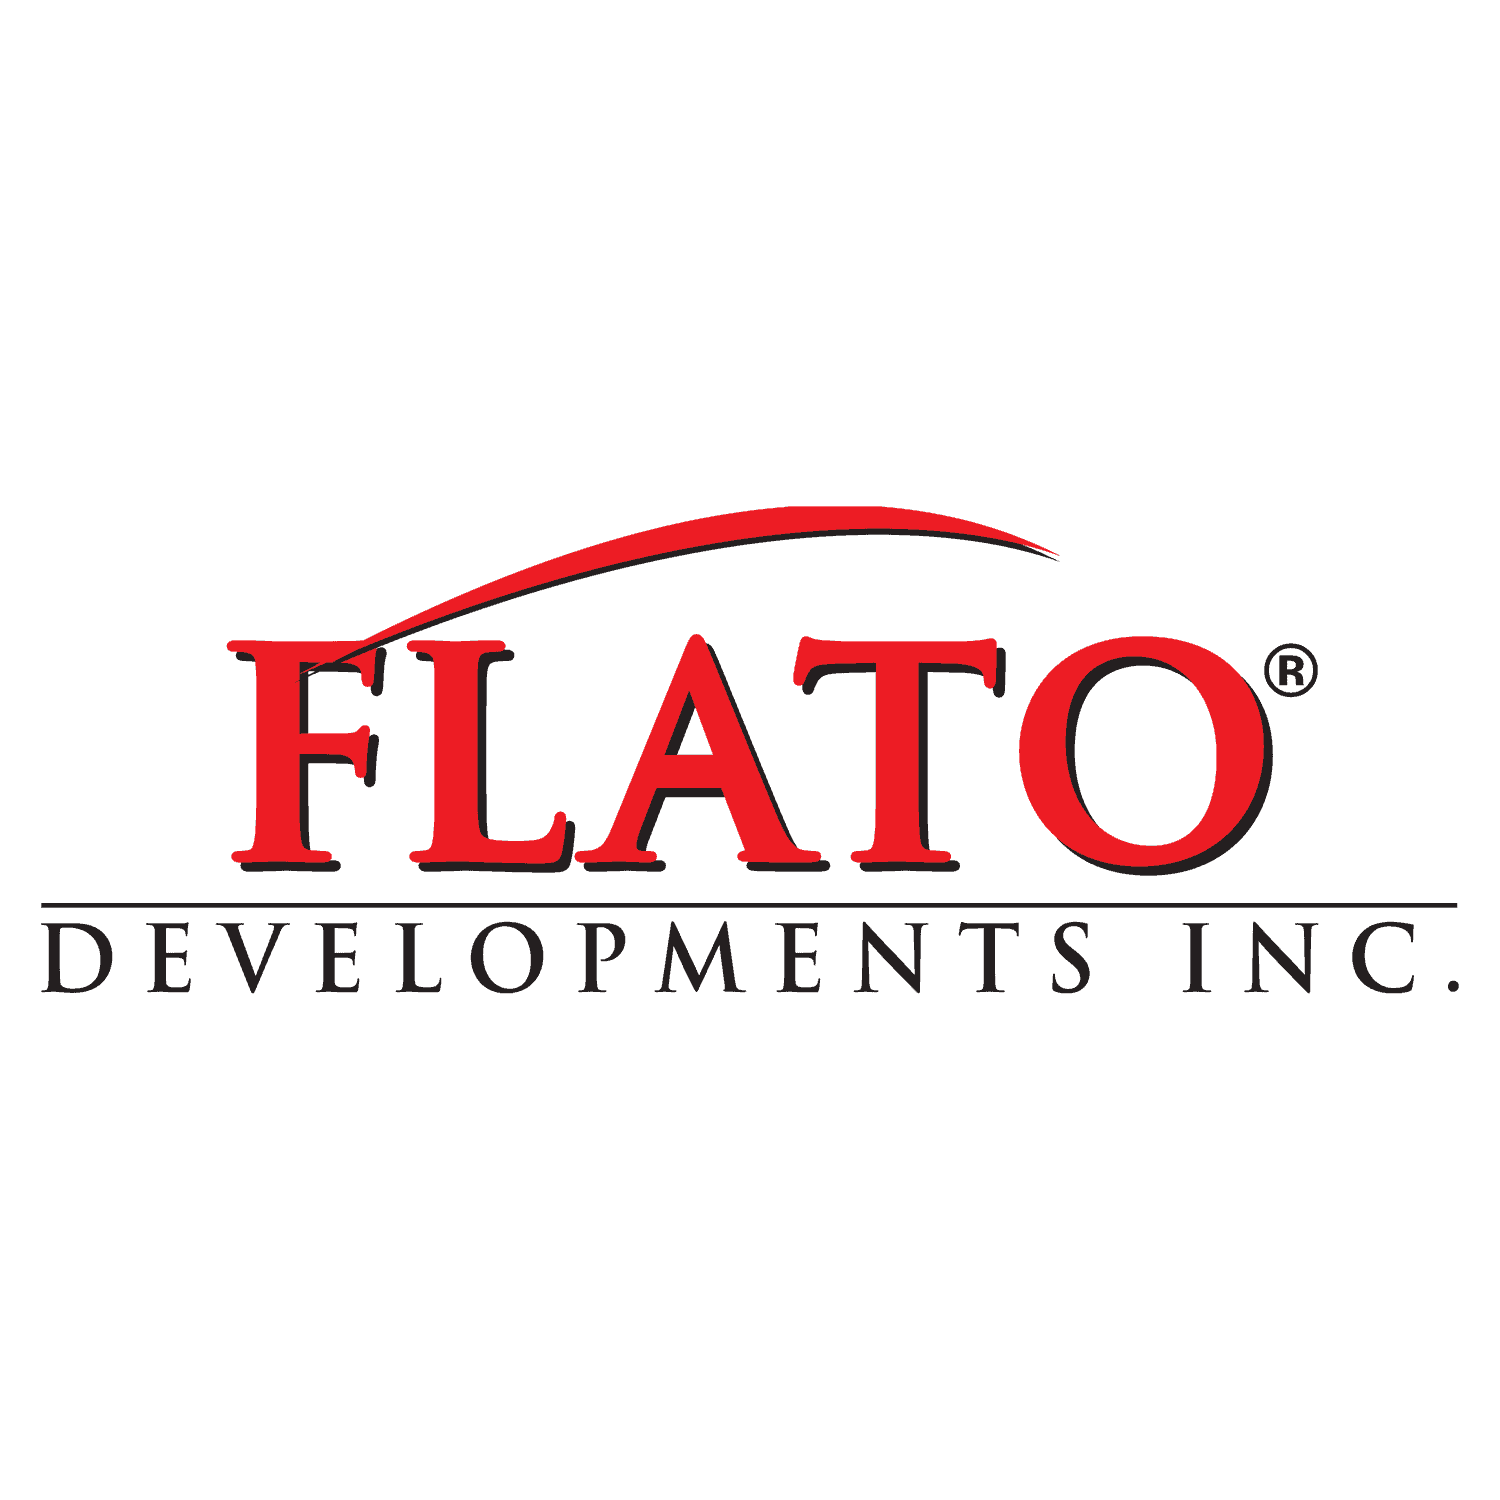 Flato-developments